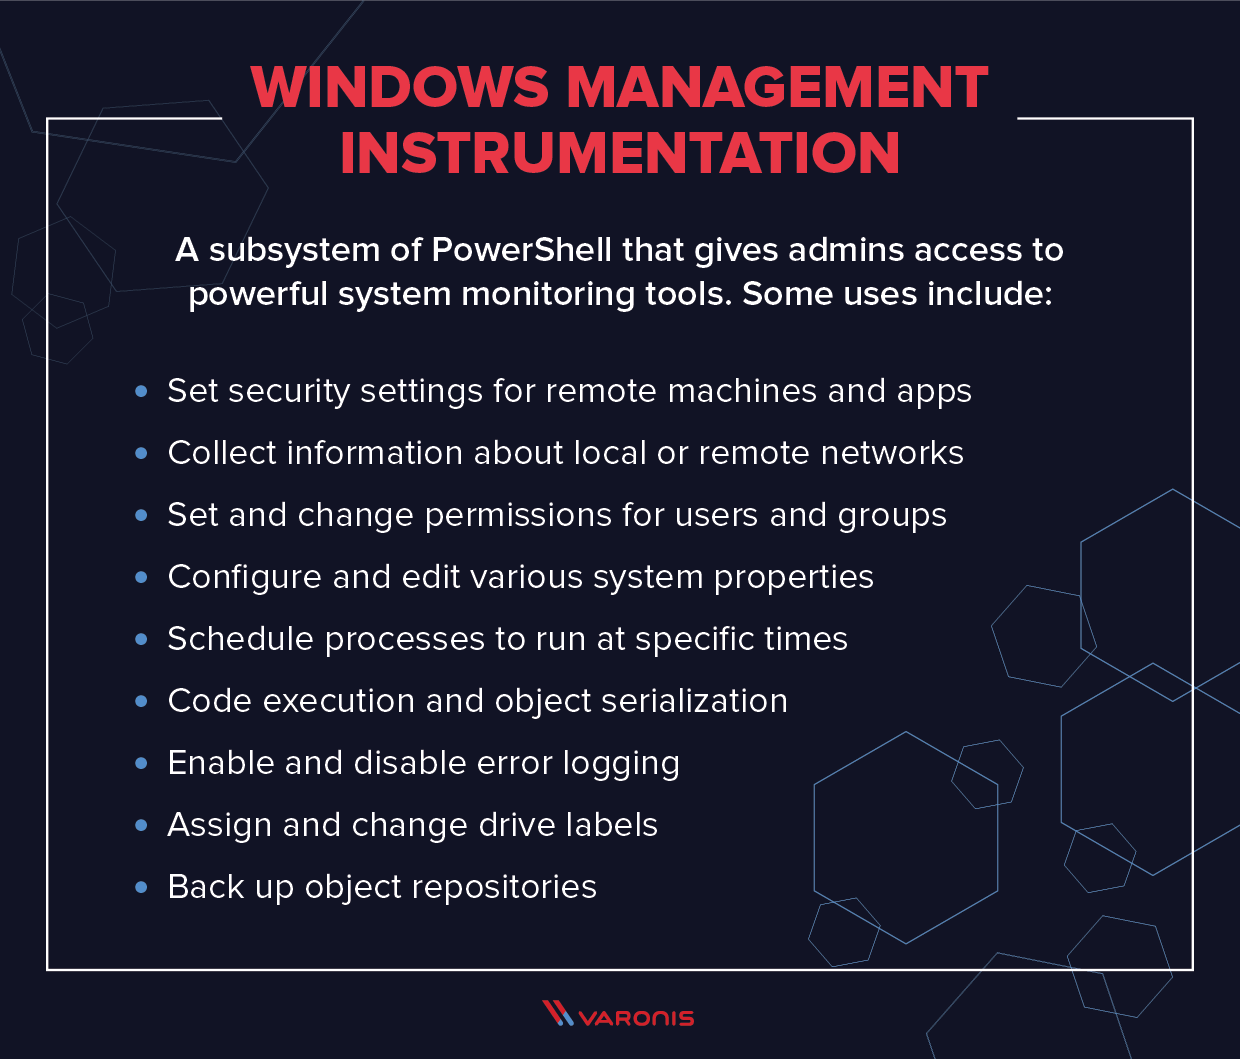 Windows management instrumentation uses listed